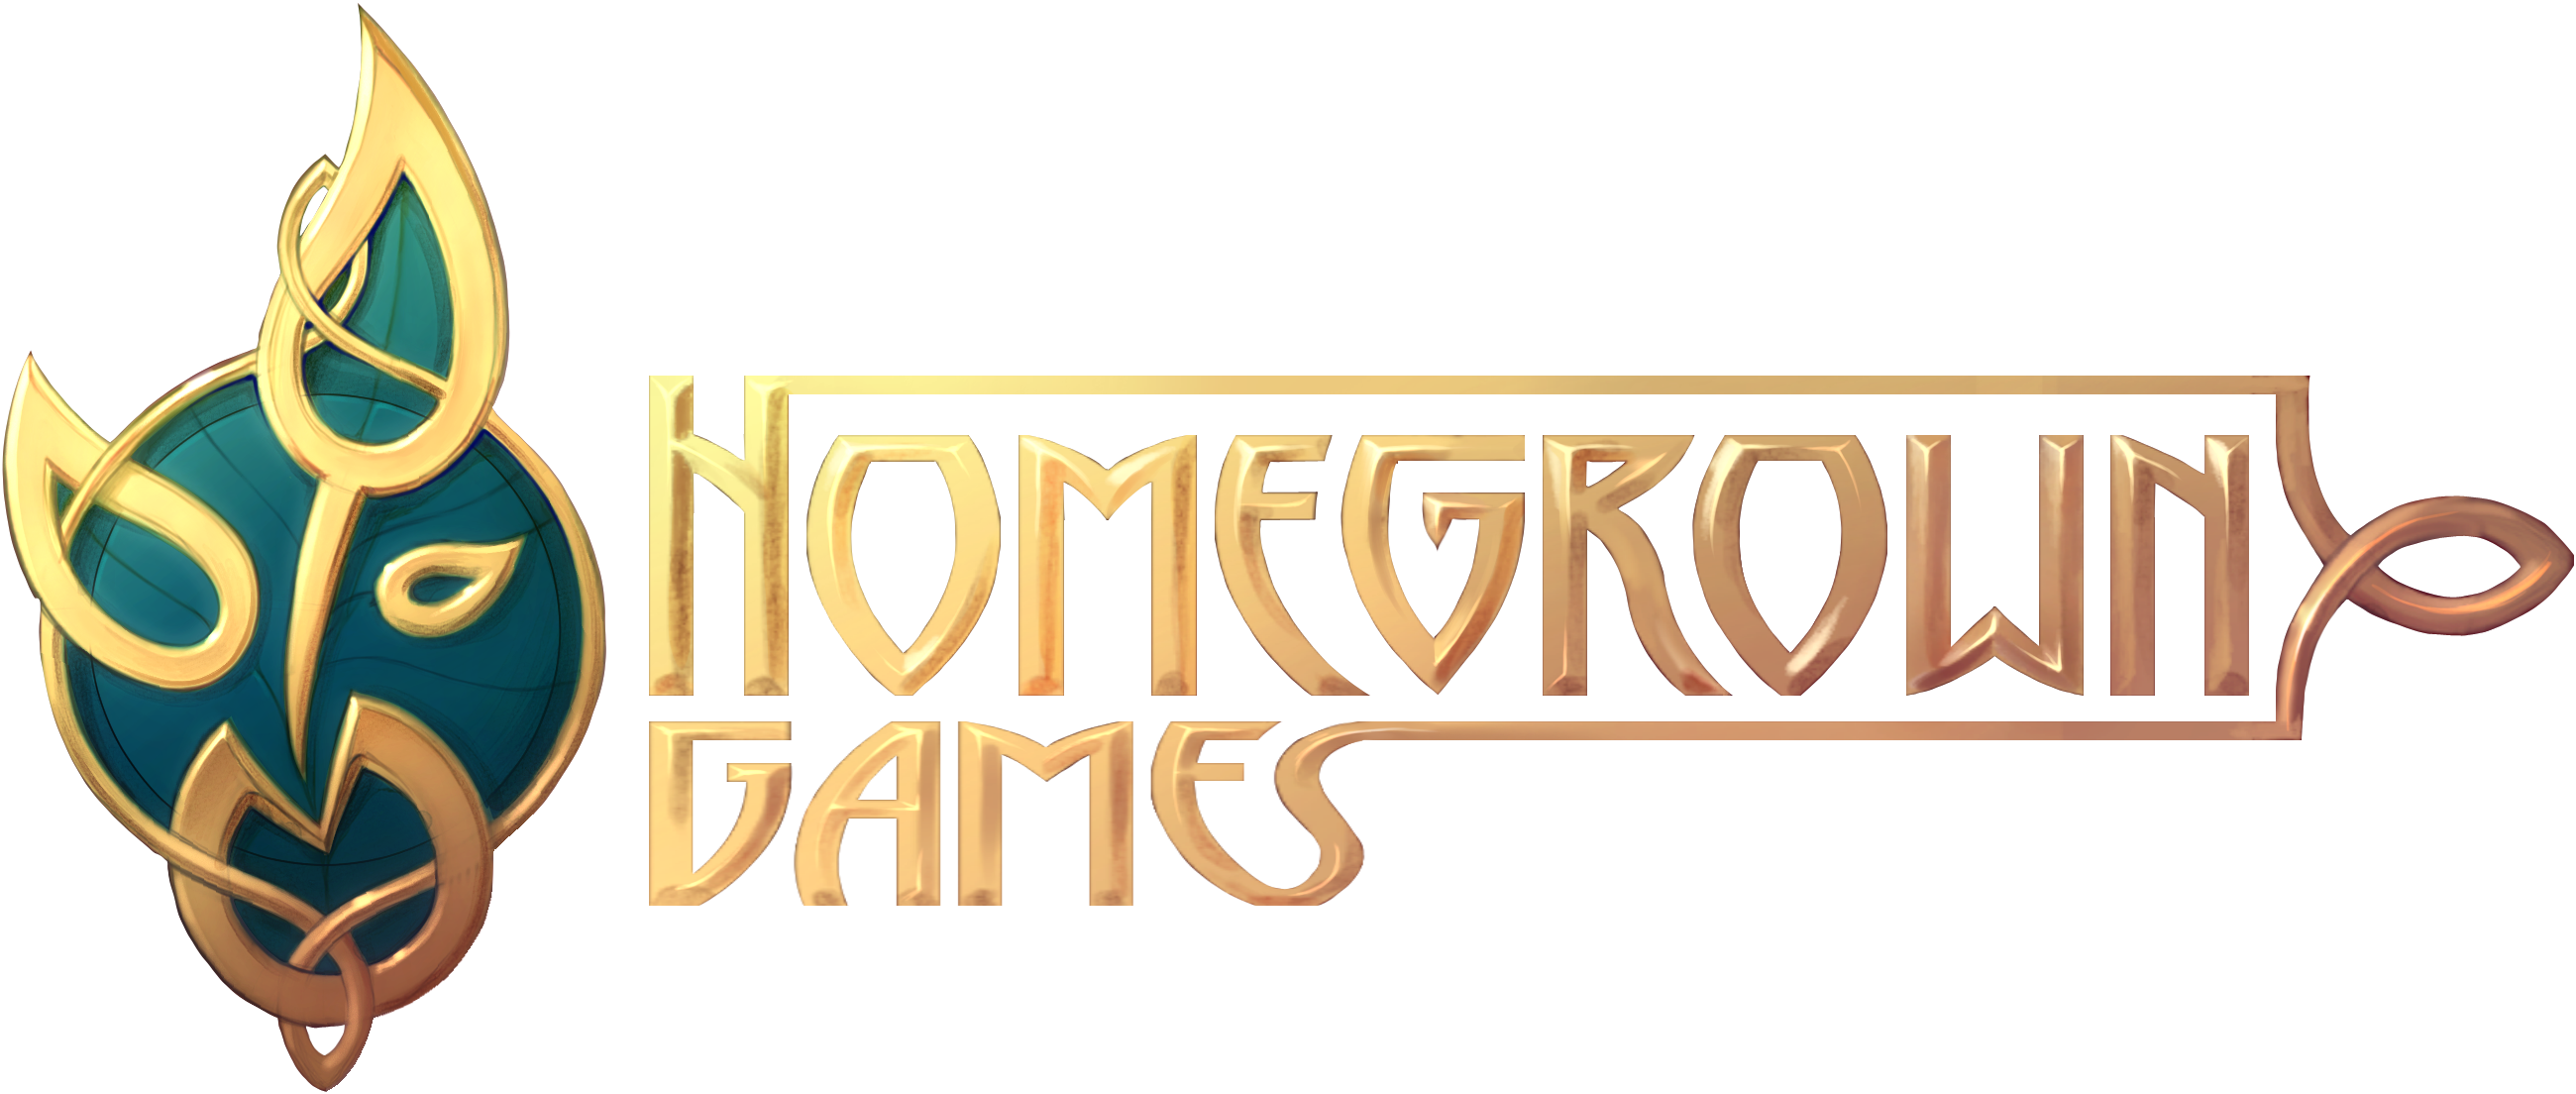 Homegrown games logo